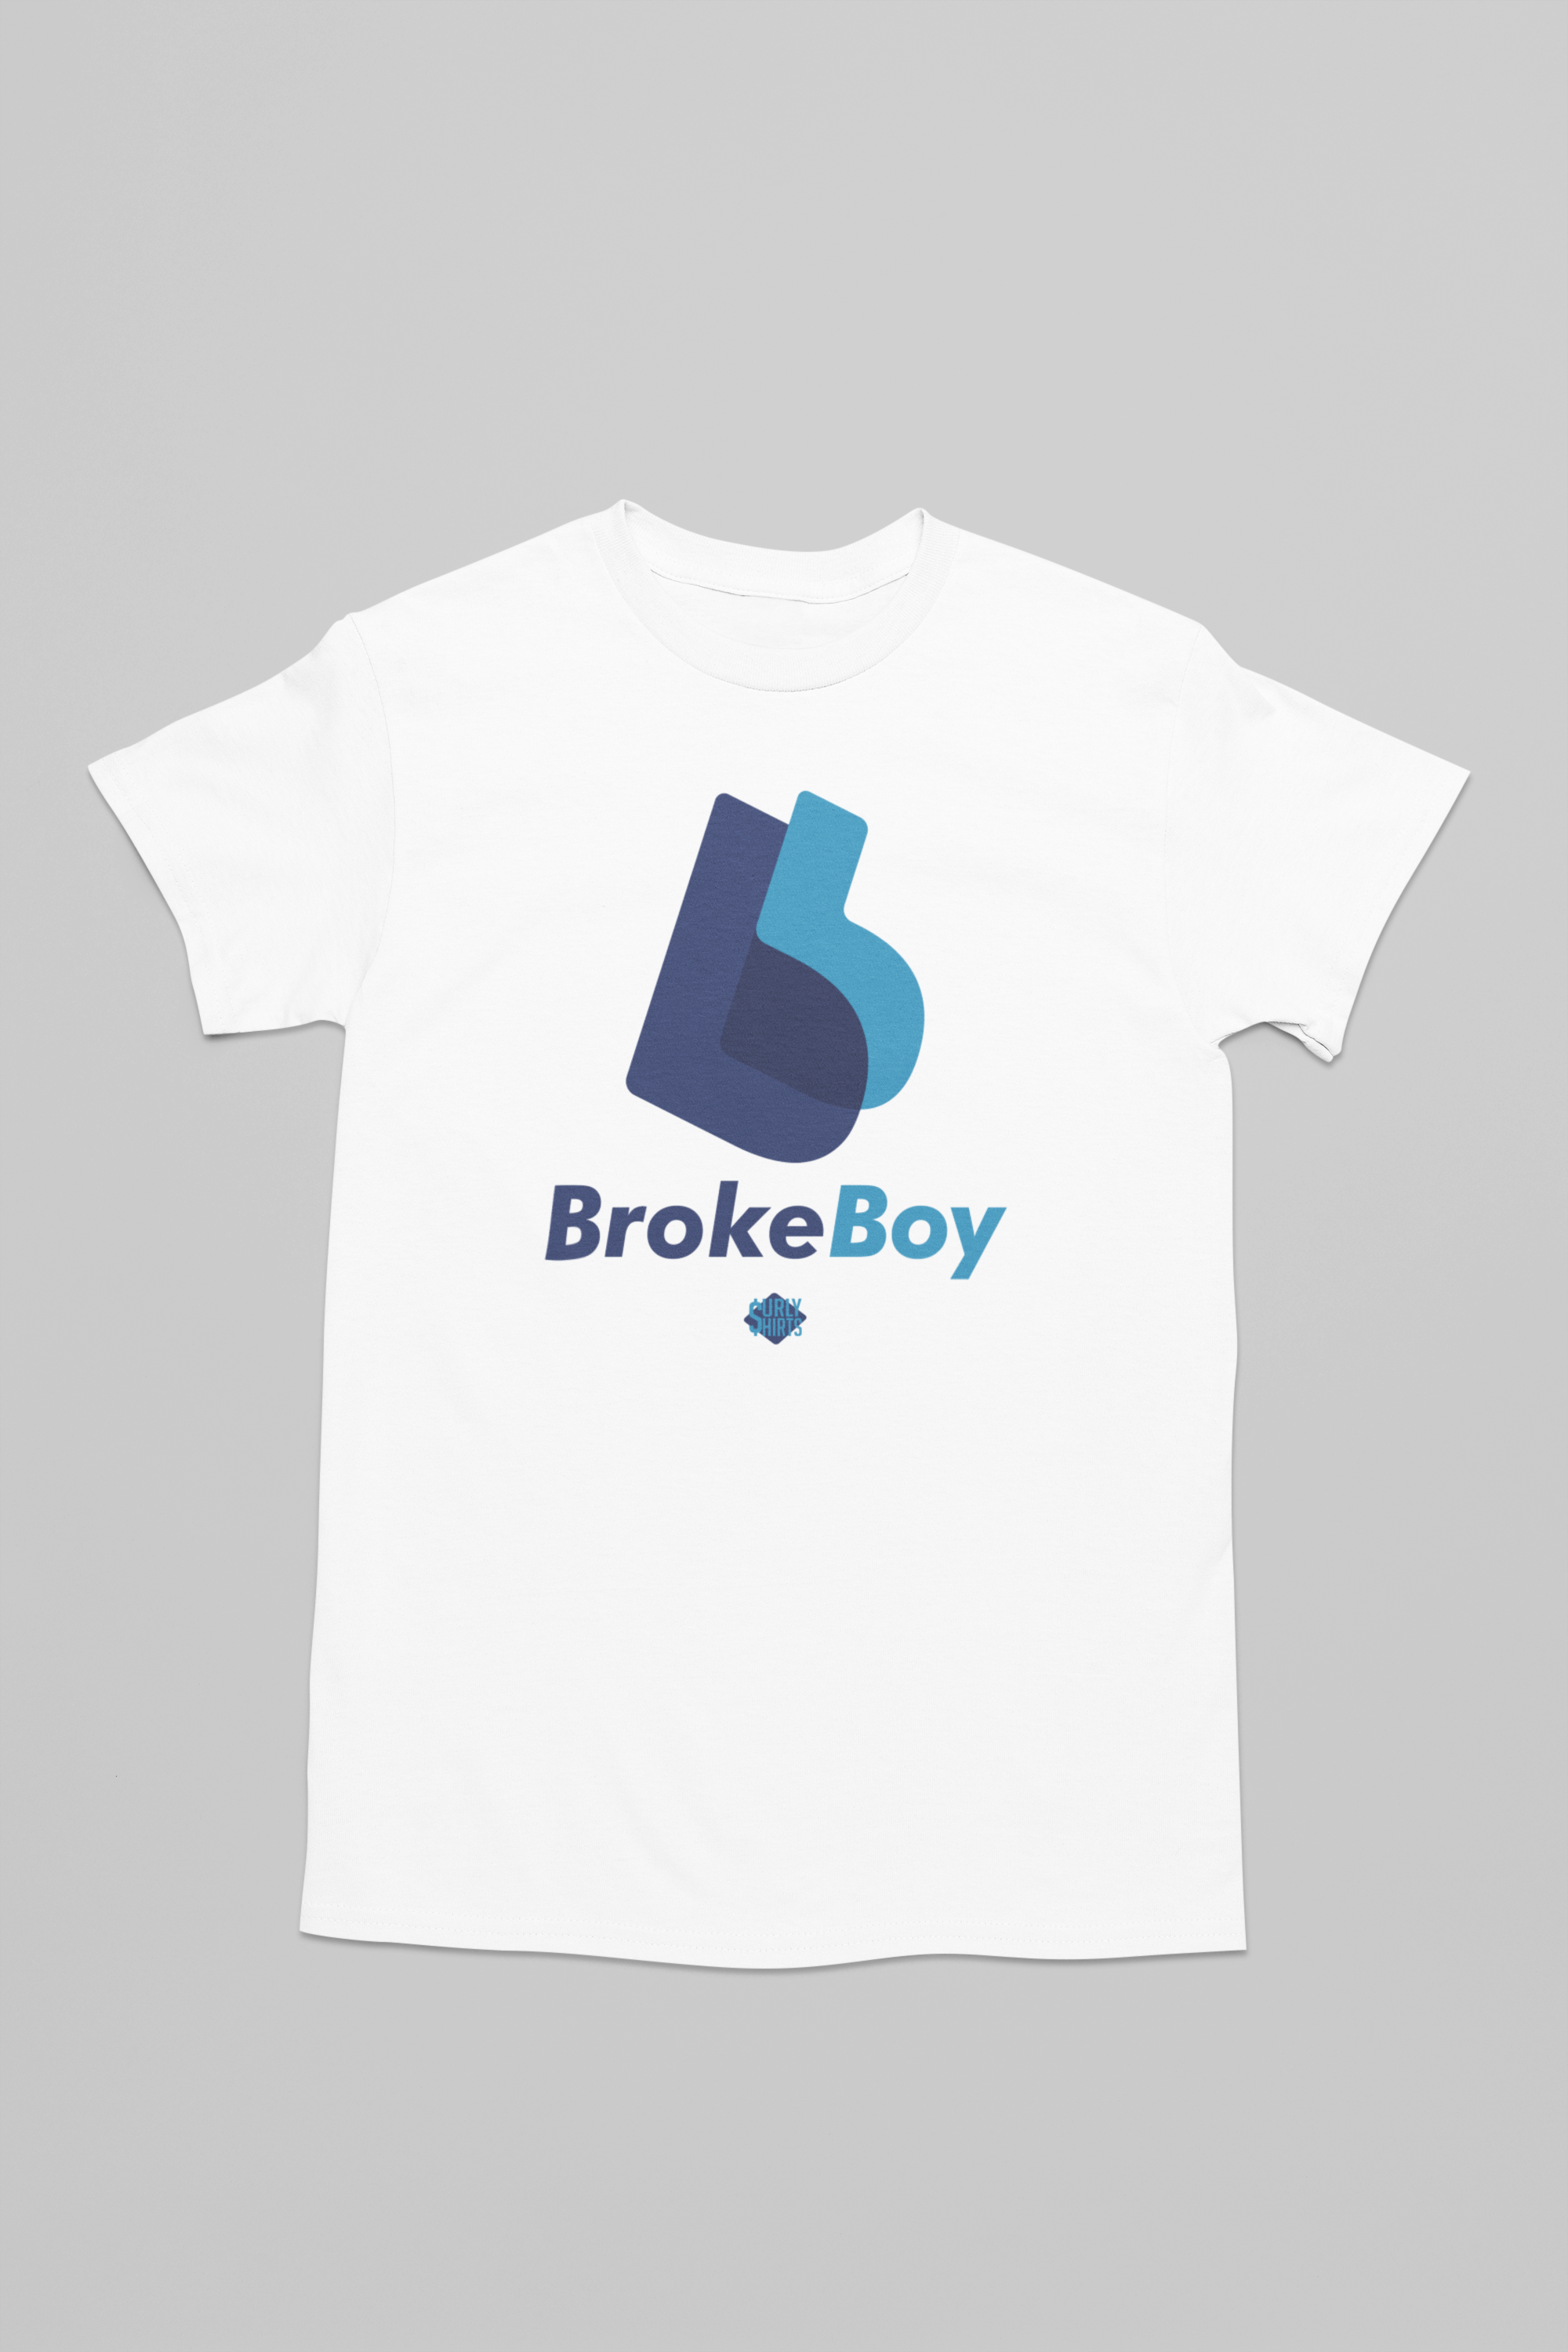 Broke Boy Tee